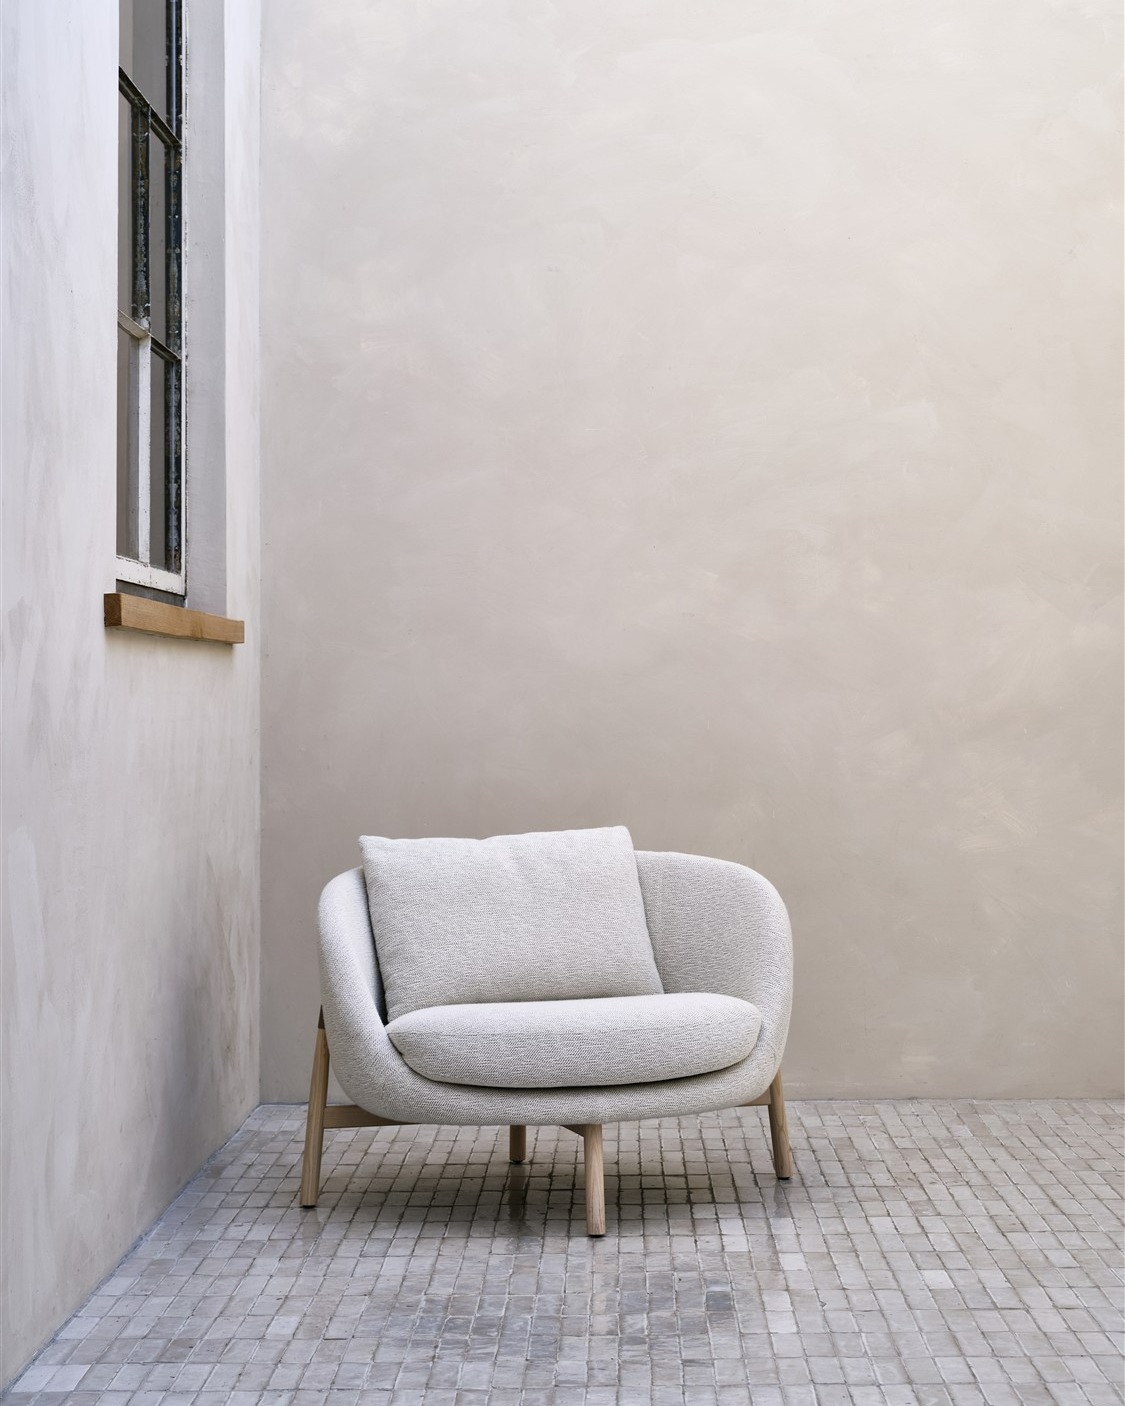 There's beauty in minimalism. The Heath armchair, design by Yabu Pushelberg. 

#linteloo